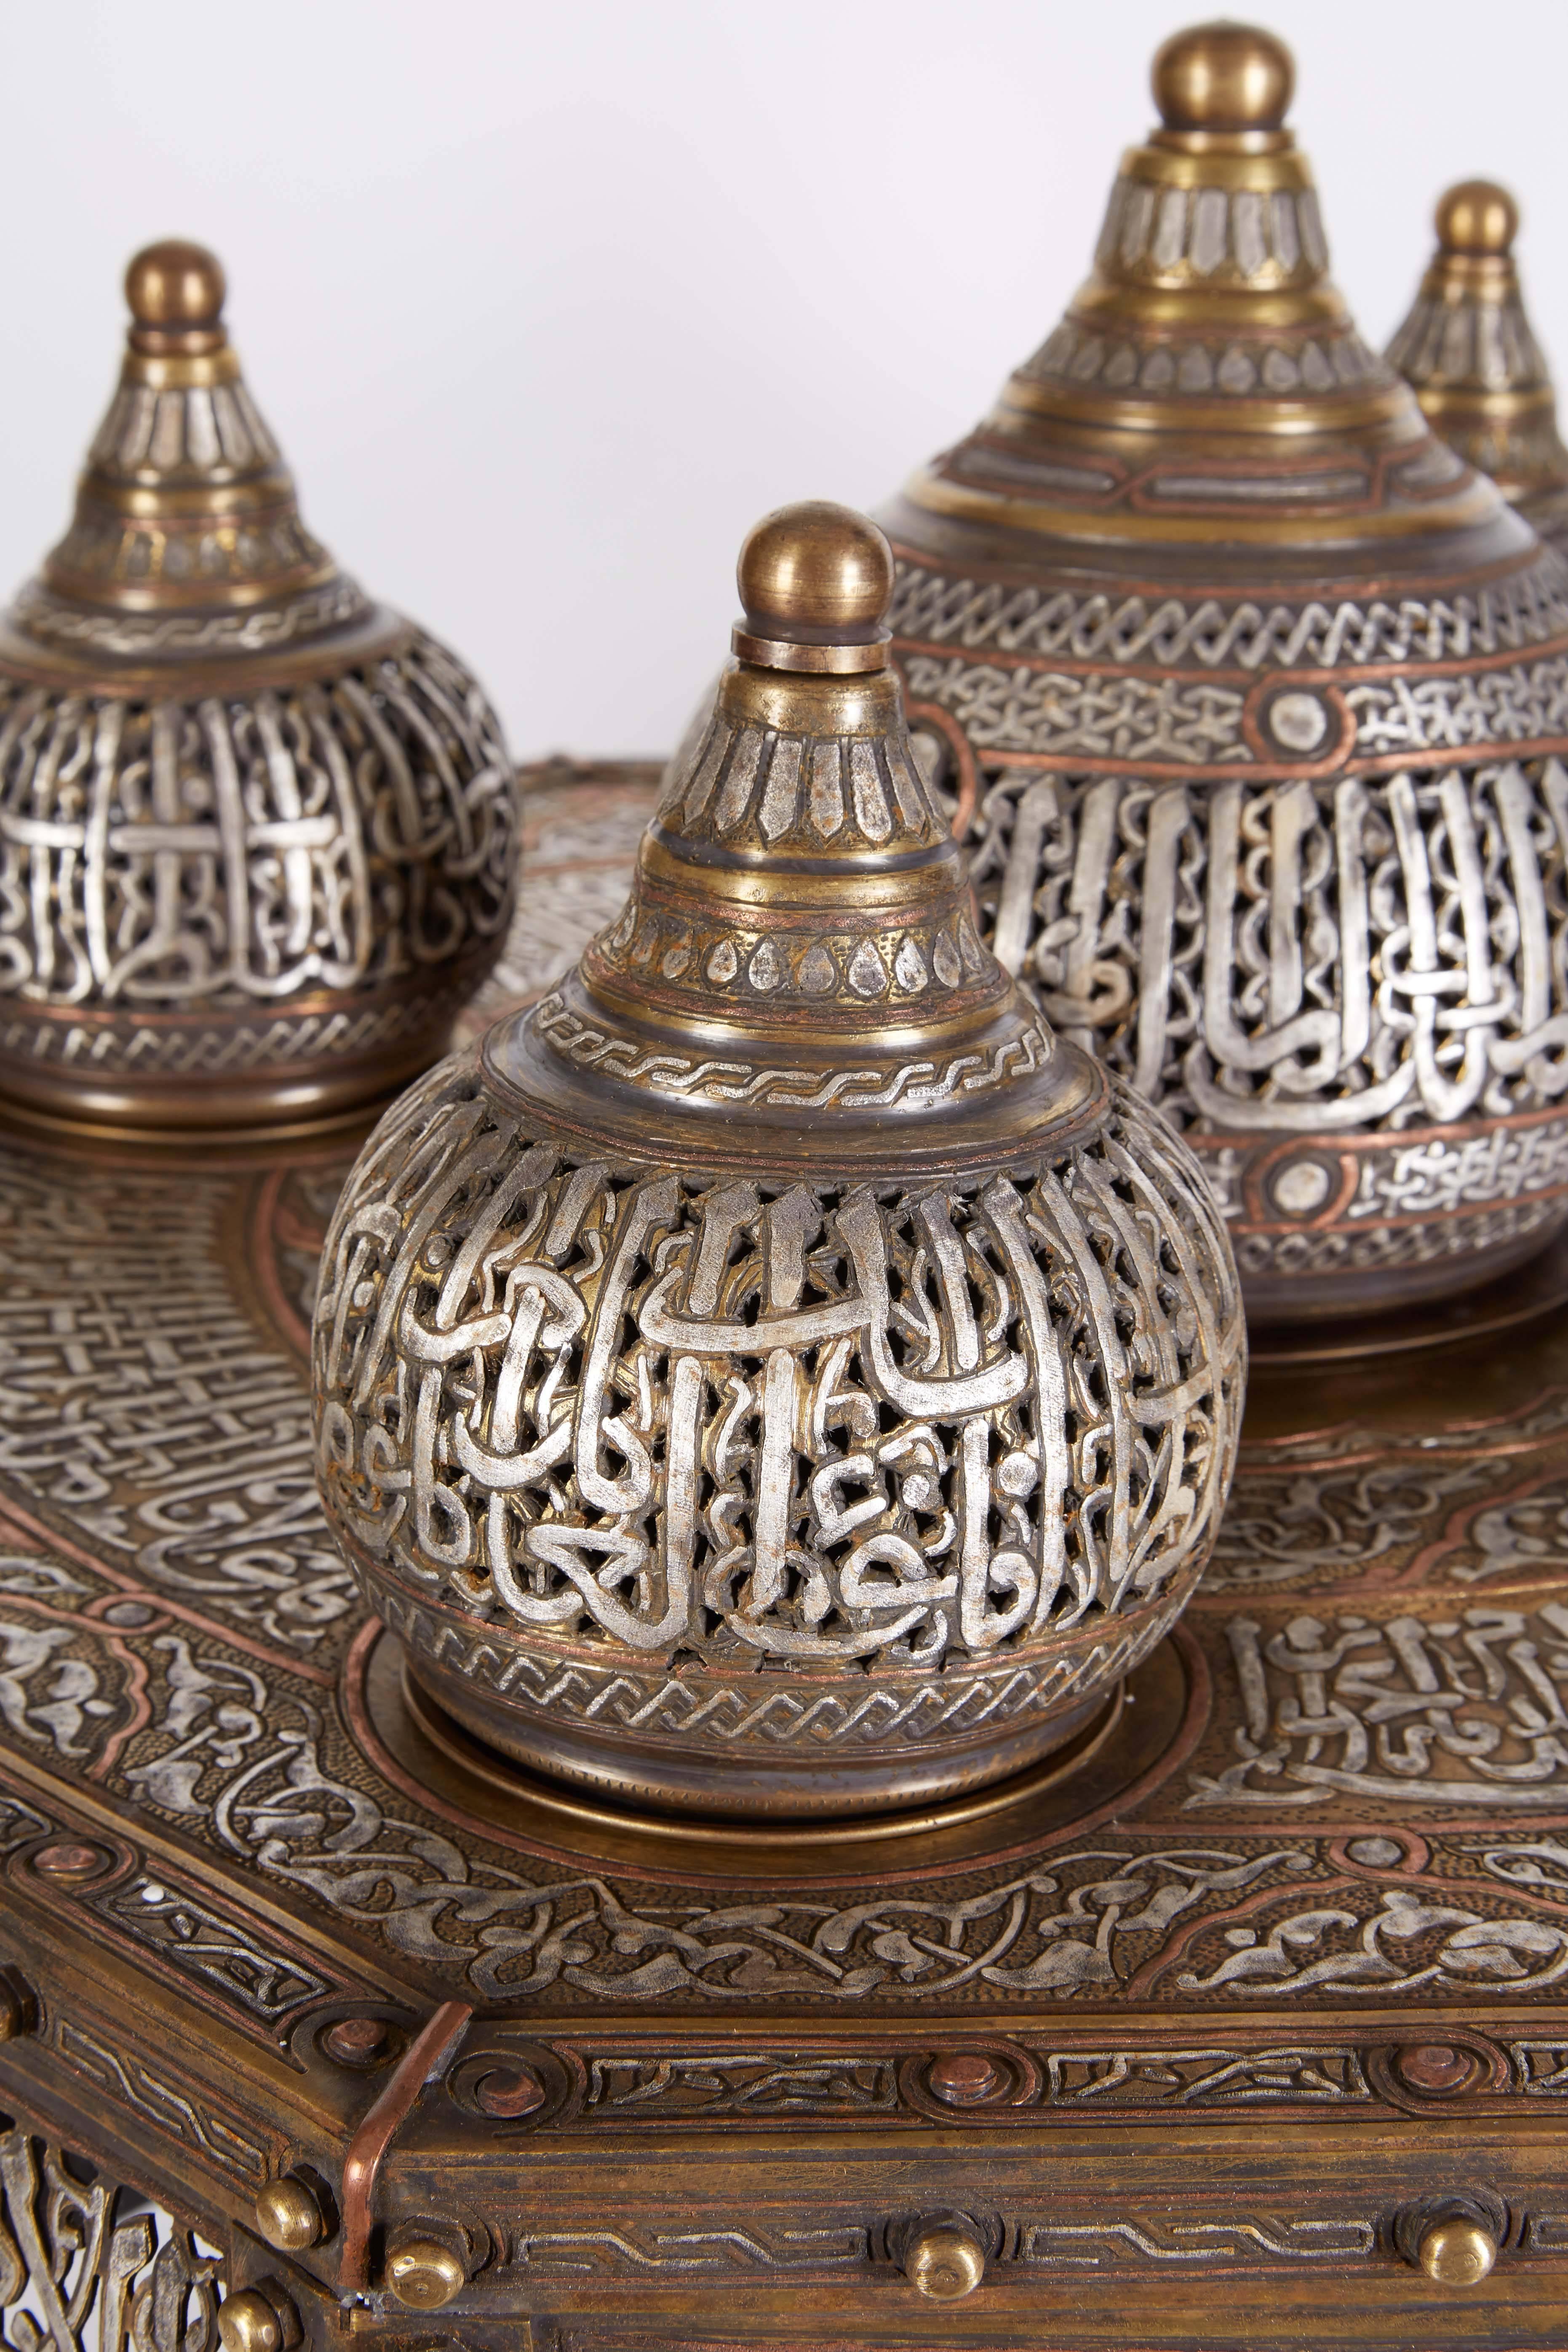 Syrian Large Islamic Silver Inlaid Domed Incense Burner with Arabic Calligraphy Moorish